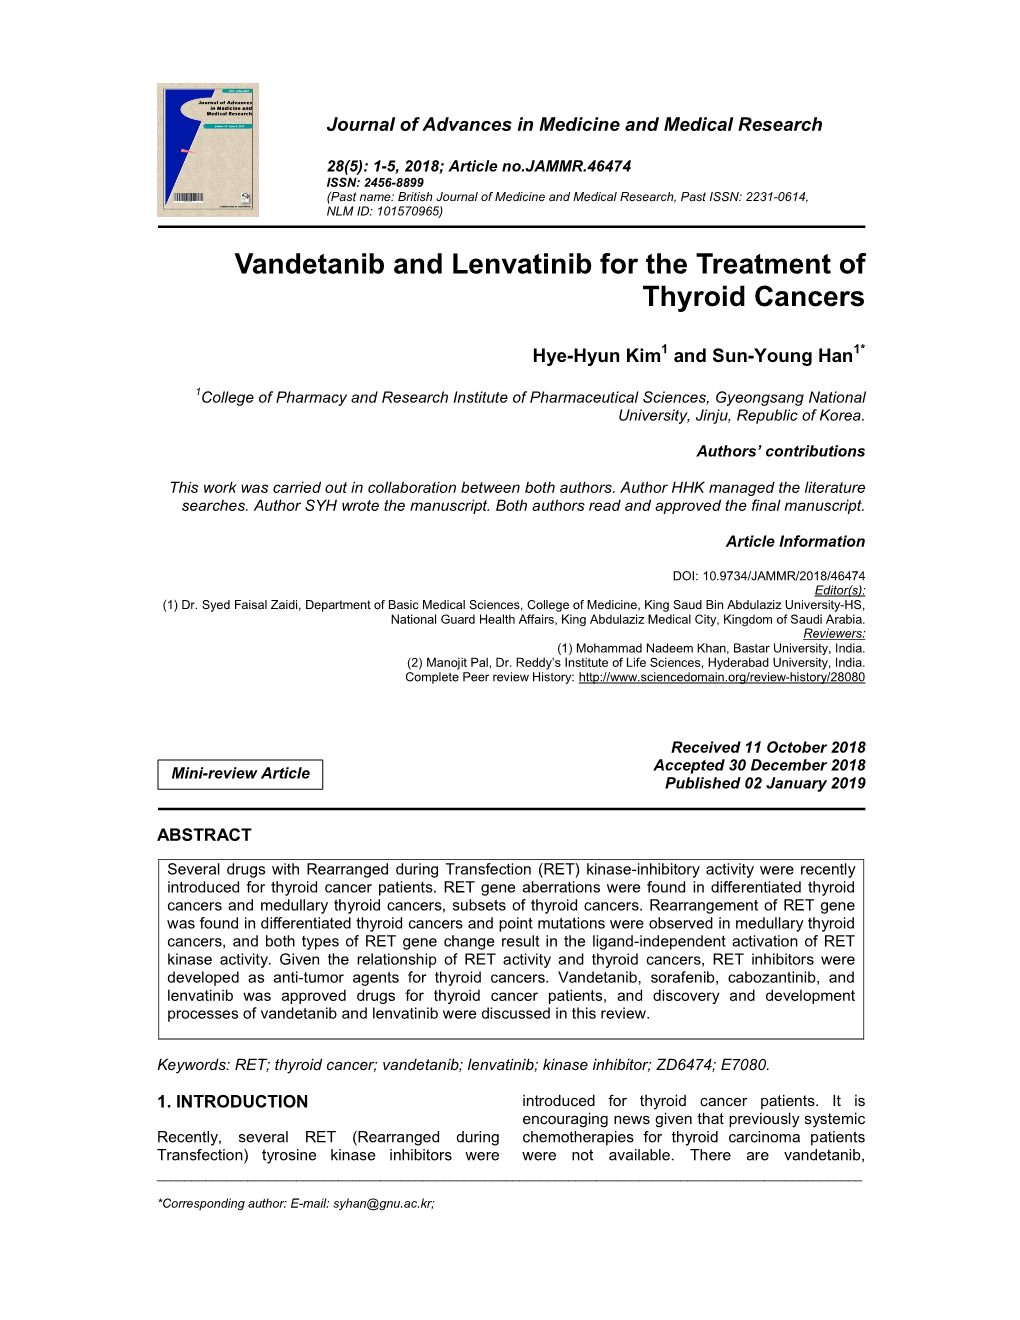 Vandetanib and Lenvatinib for the Treatment of Thyroid Cancers